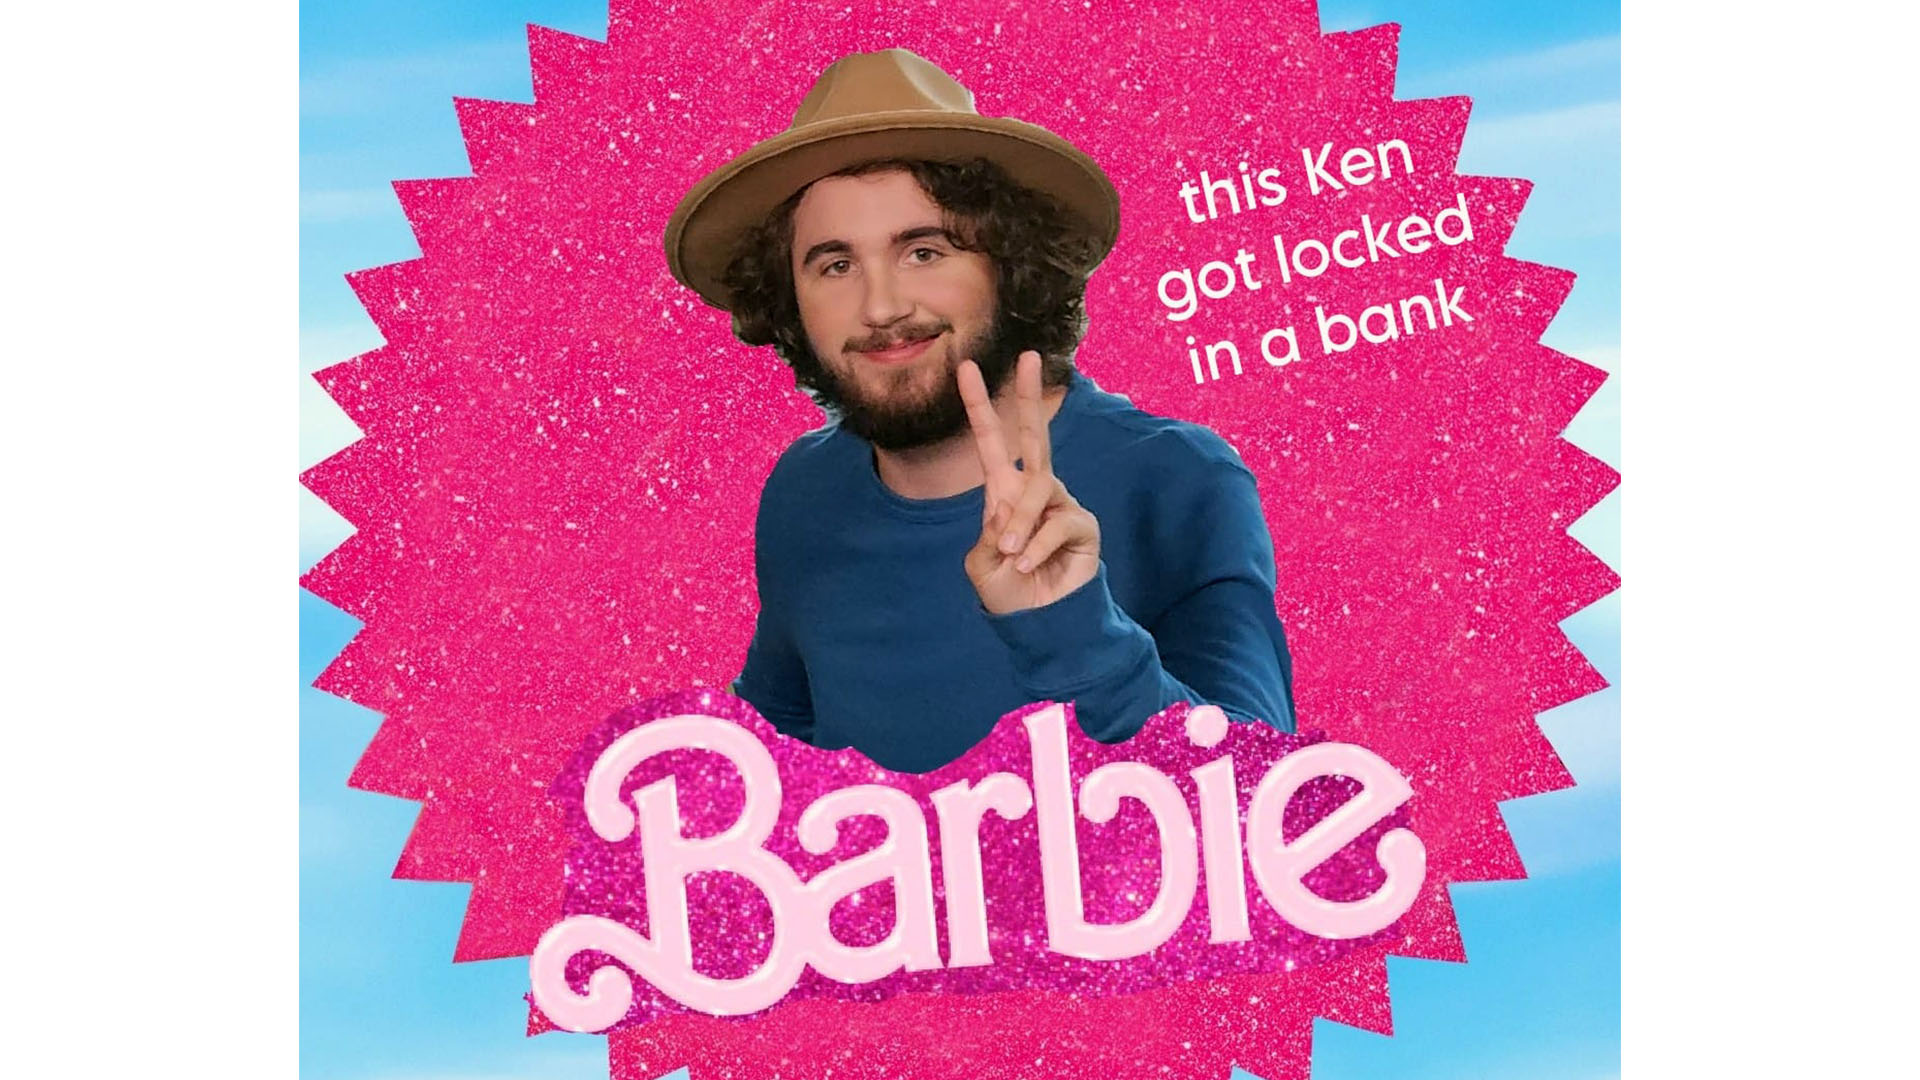 crew - barbie in bank